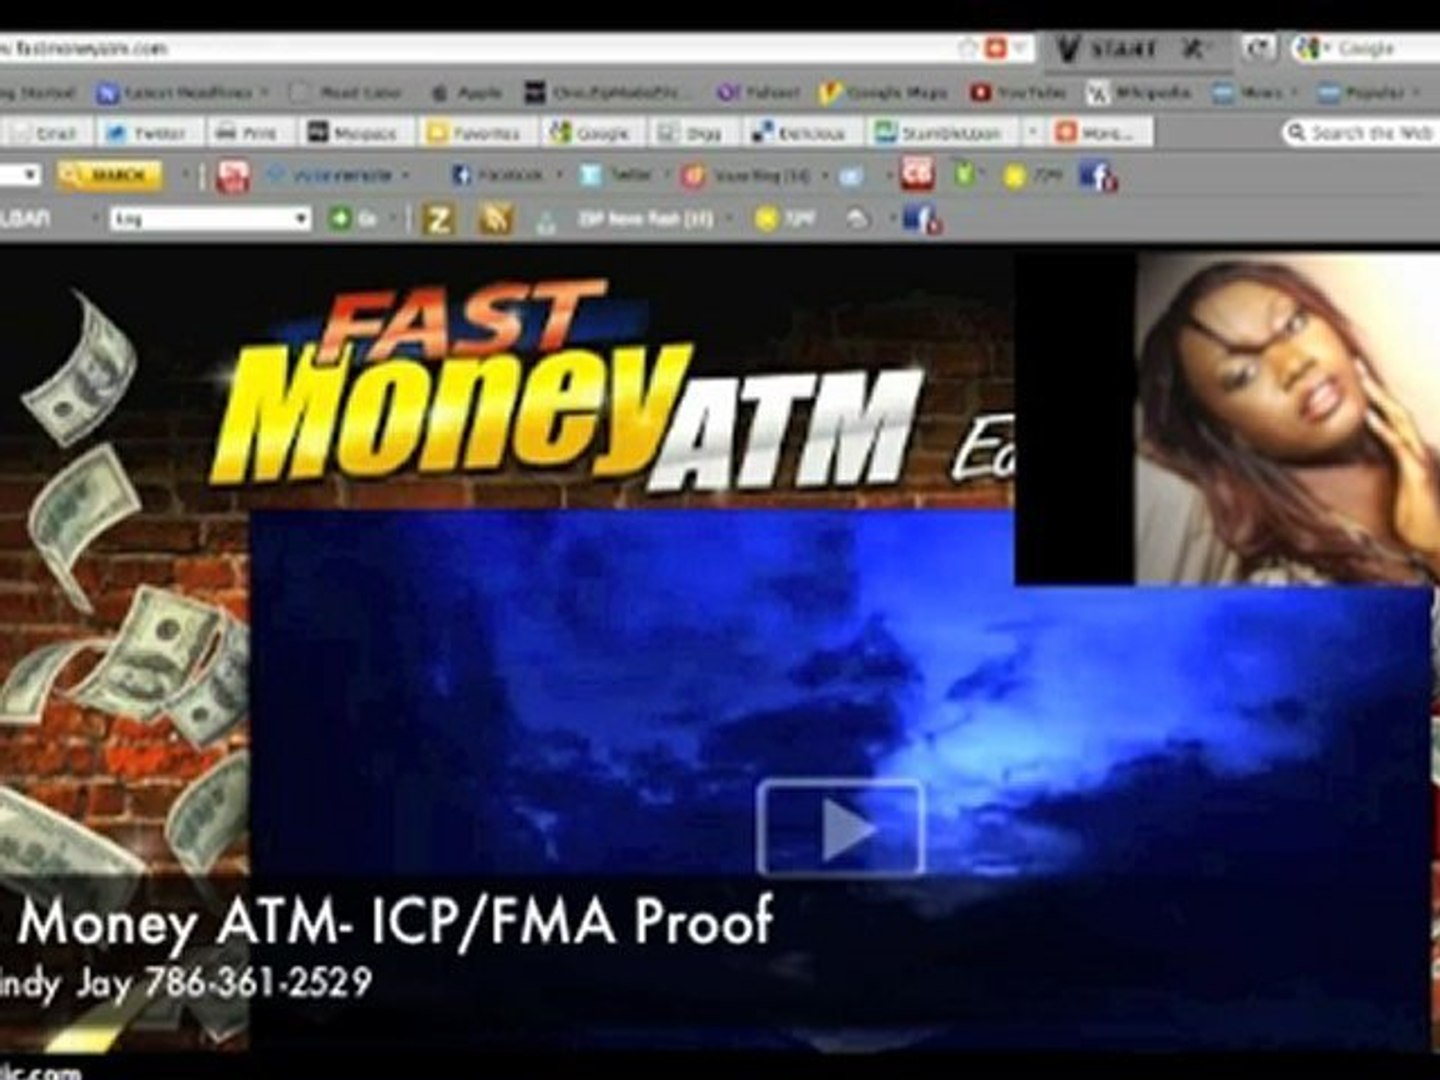 Fast Money ATM- ICP & FMA Proof